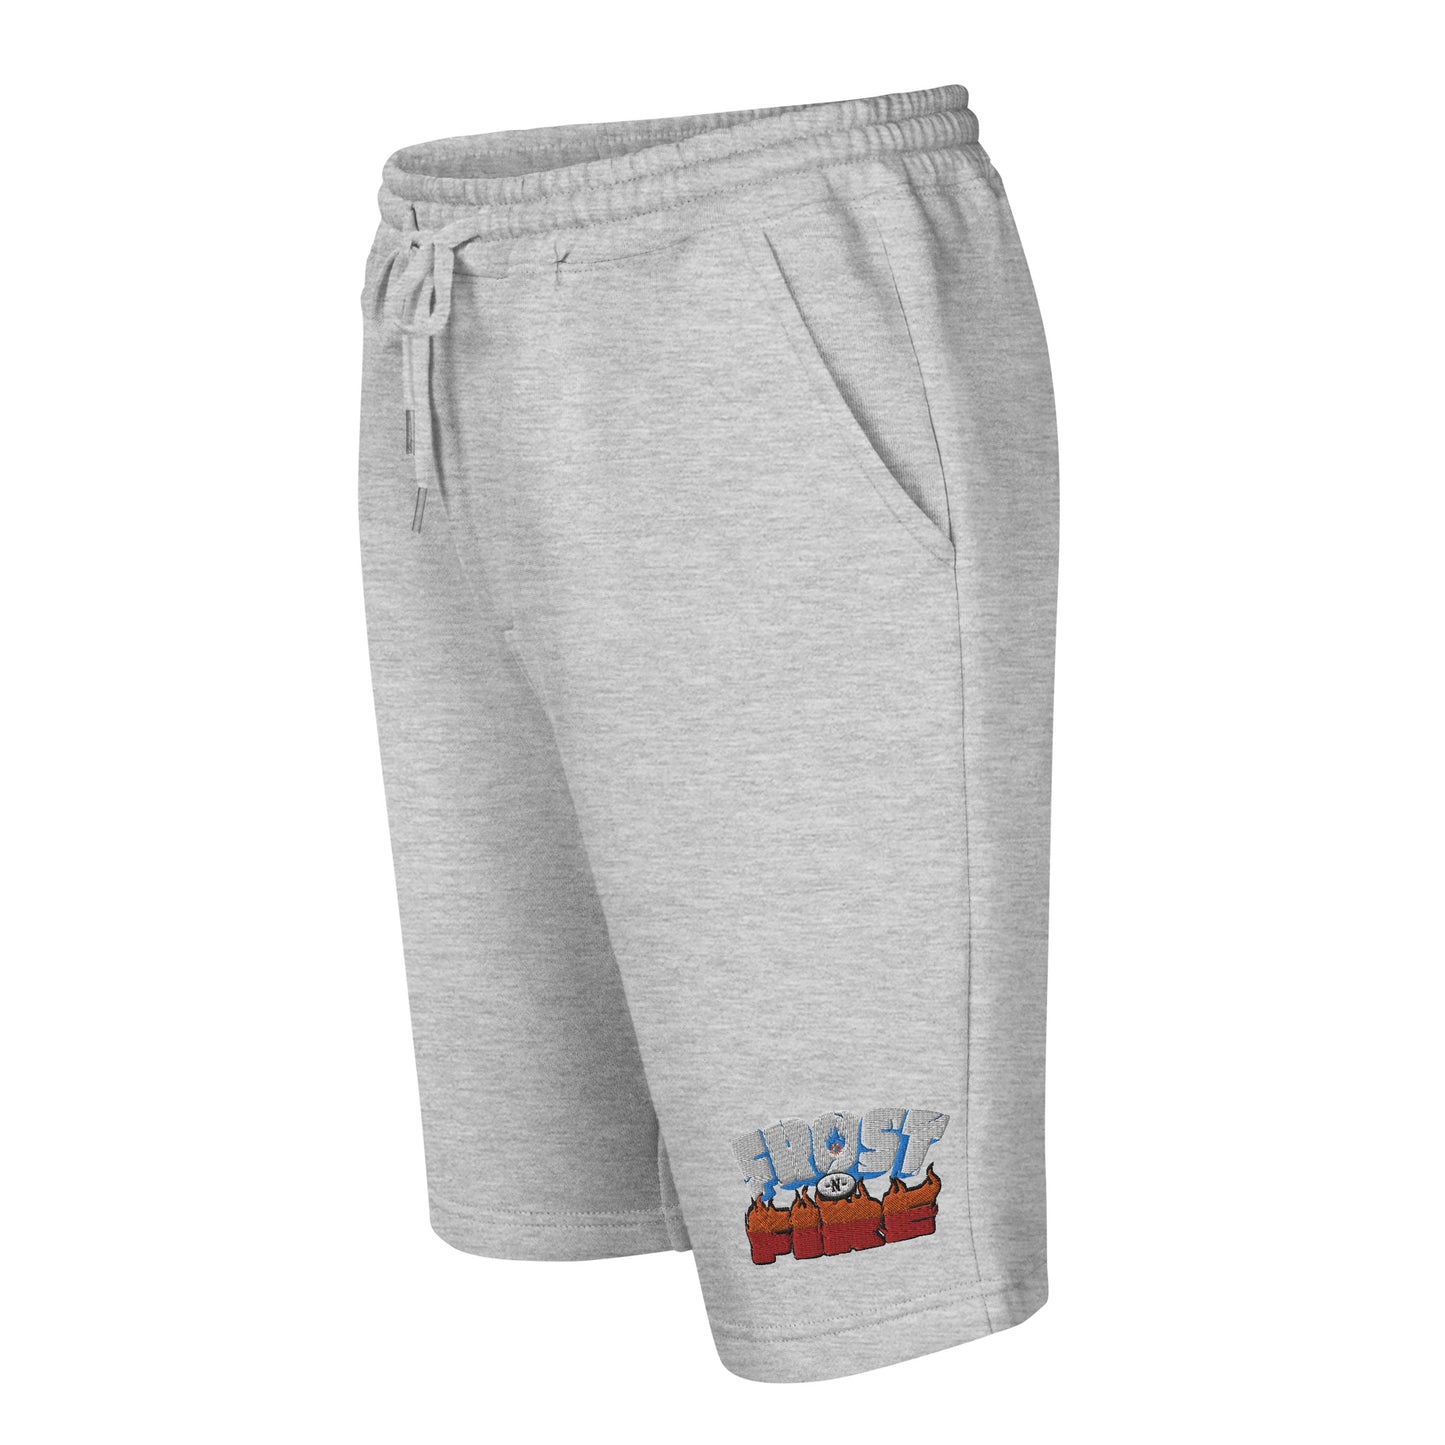 FrostnFire fleece shorts (Embroidered)